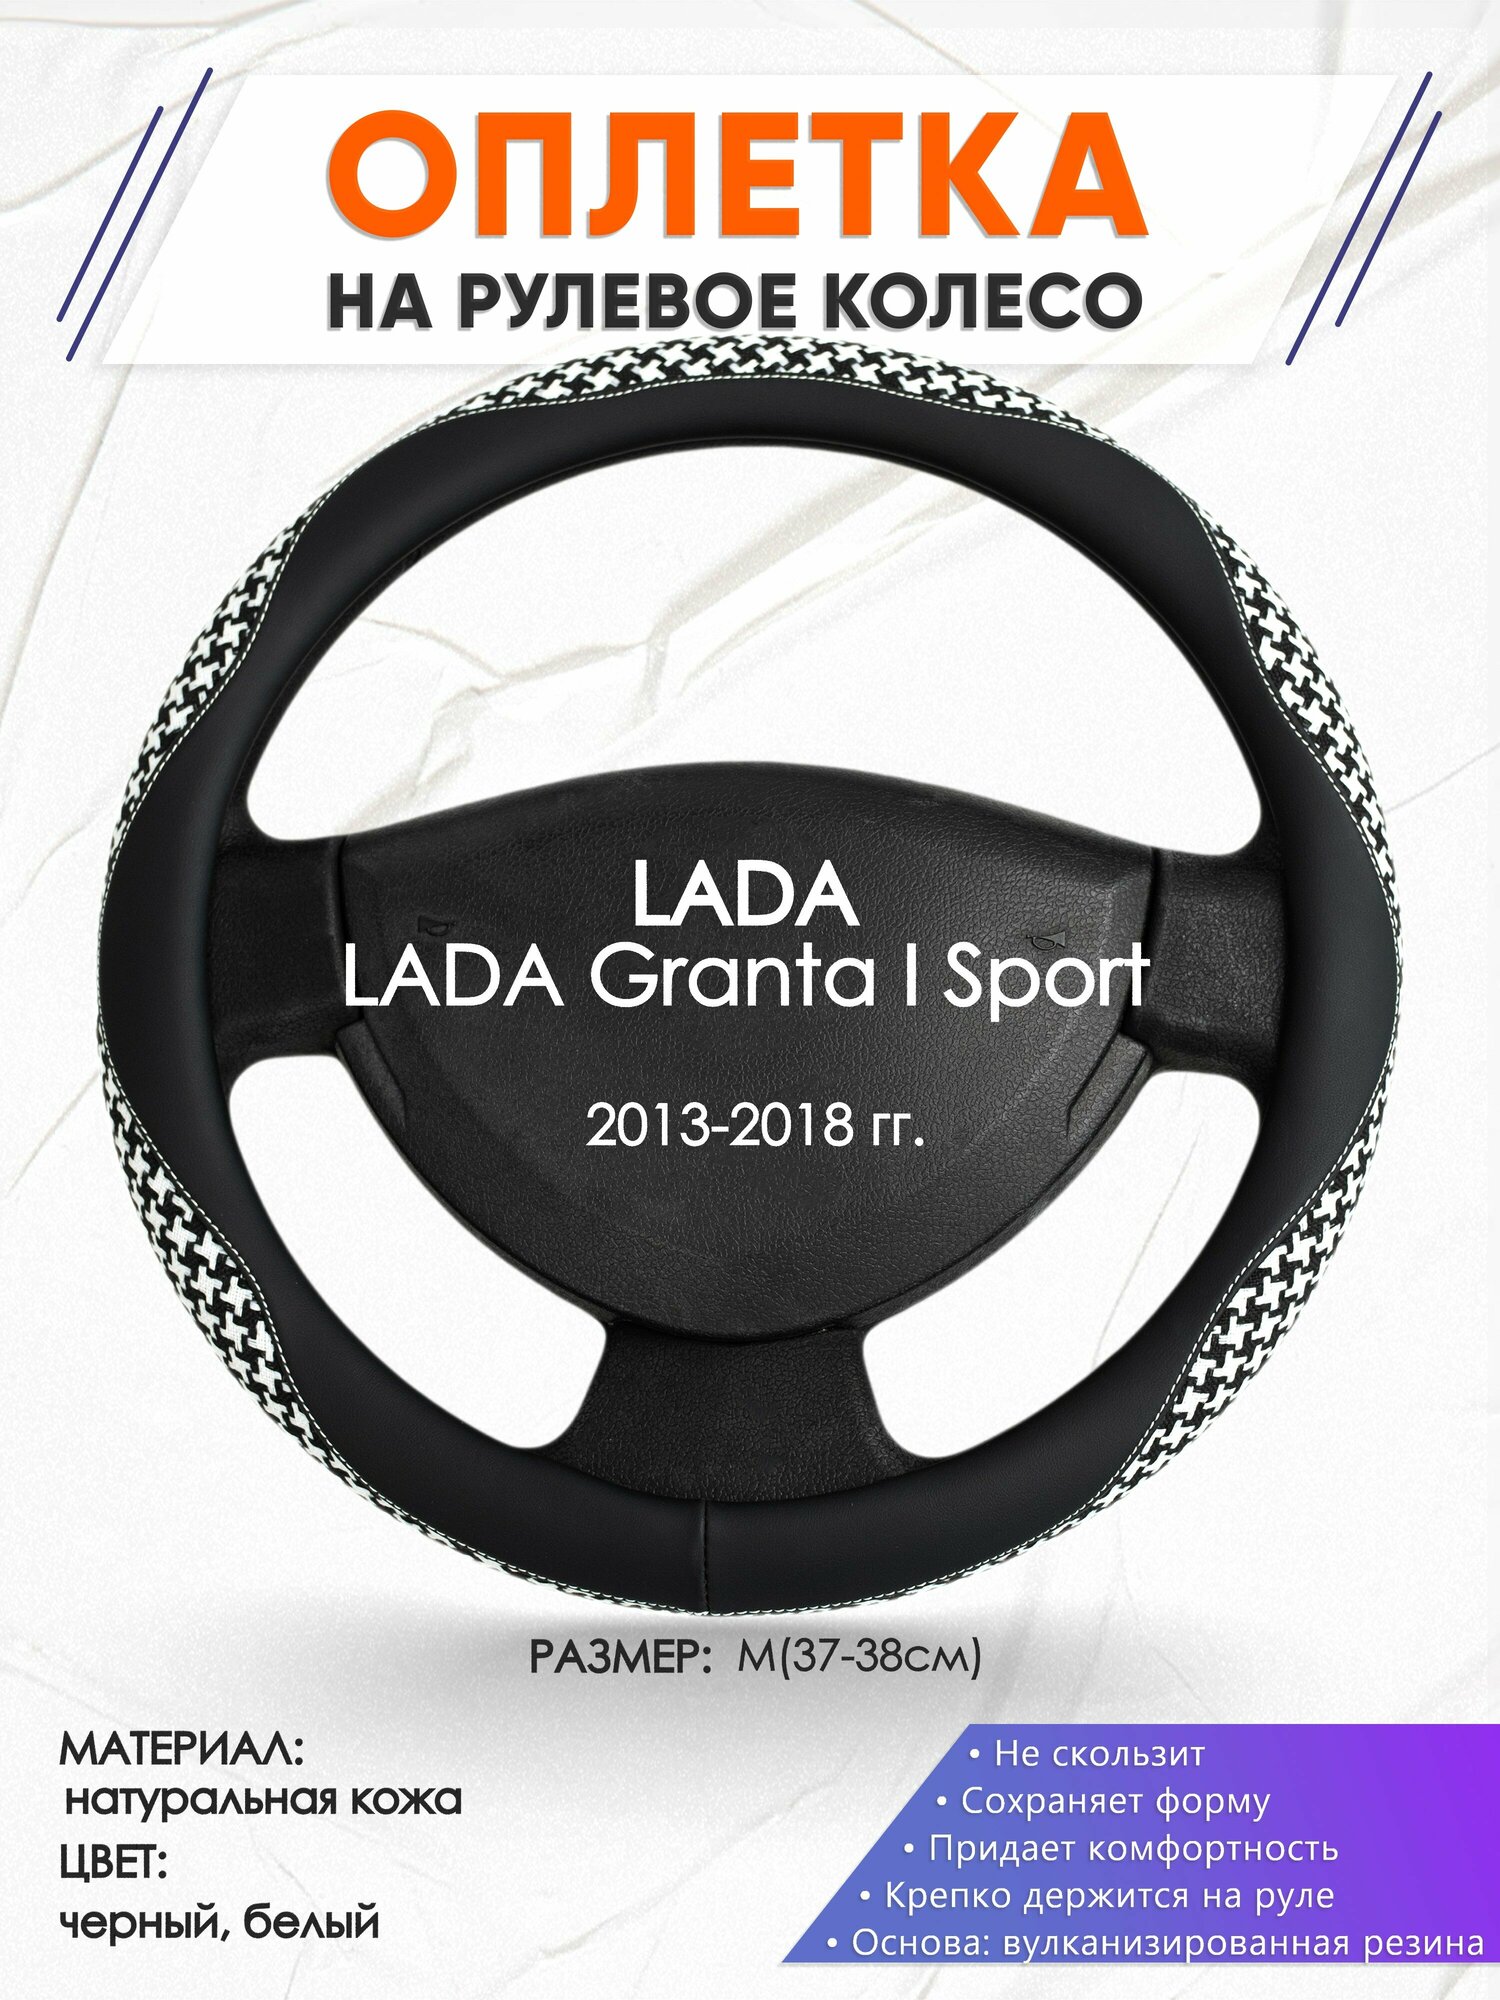 Оплетка наруль для LADA Granta I Sport(Лада Гранта спорт) 2013-2018 годов выпуска, размер M(37-38см), Натуральная кожа 21